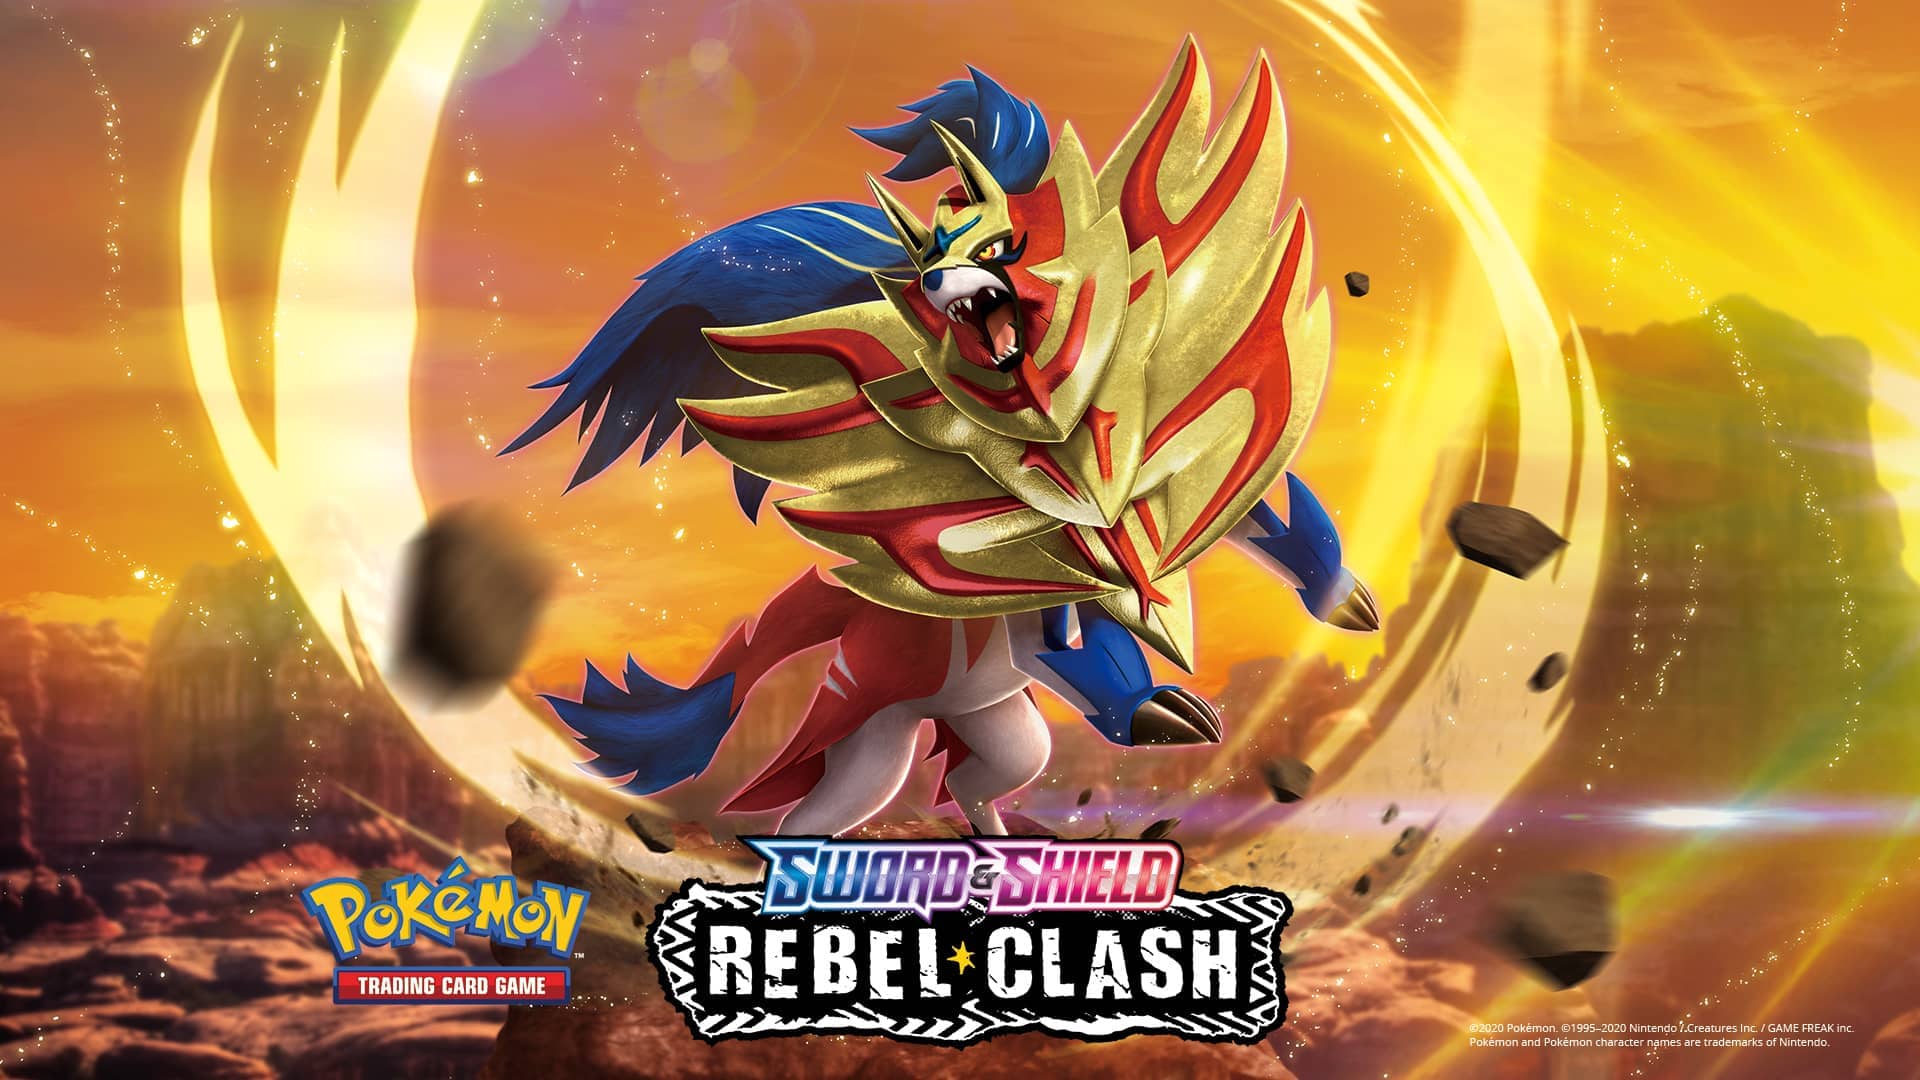 Pokémon Sword & Shield Wallpaper Download - Play Nintendo.